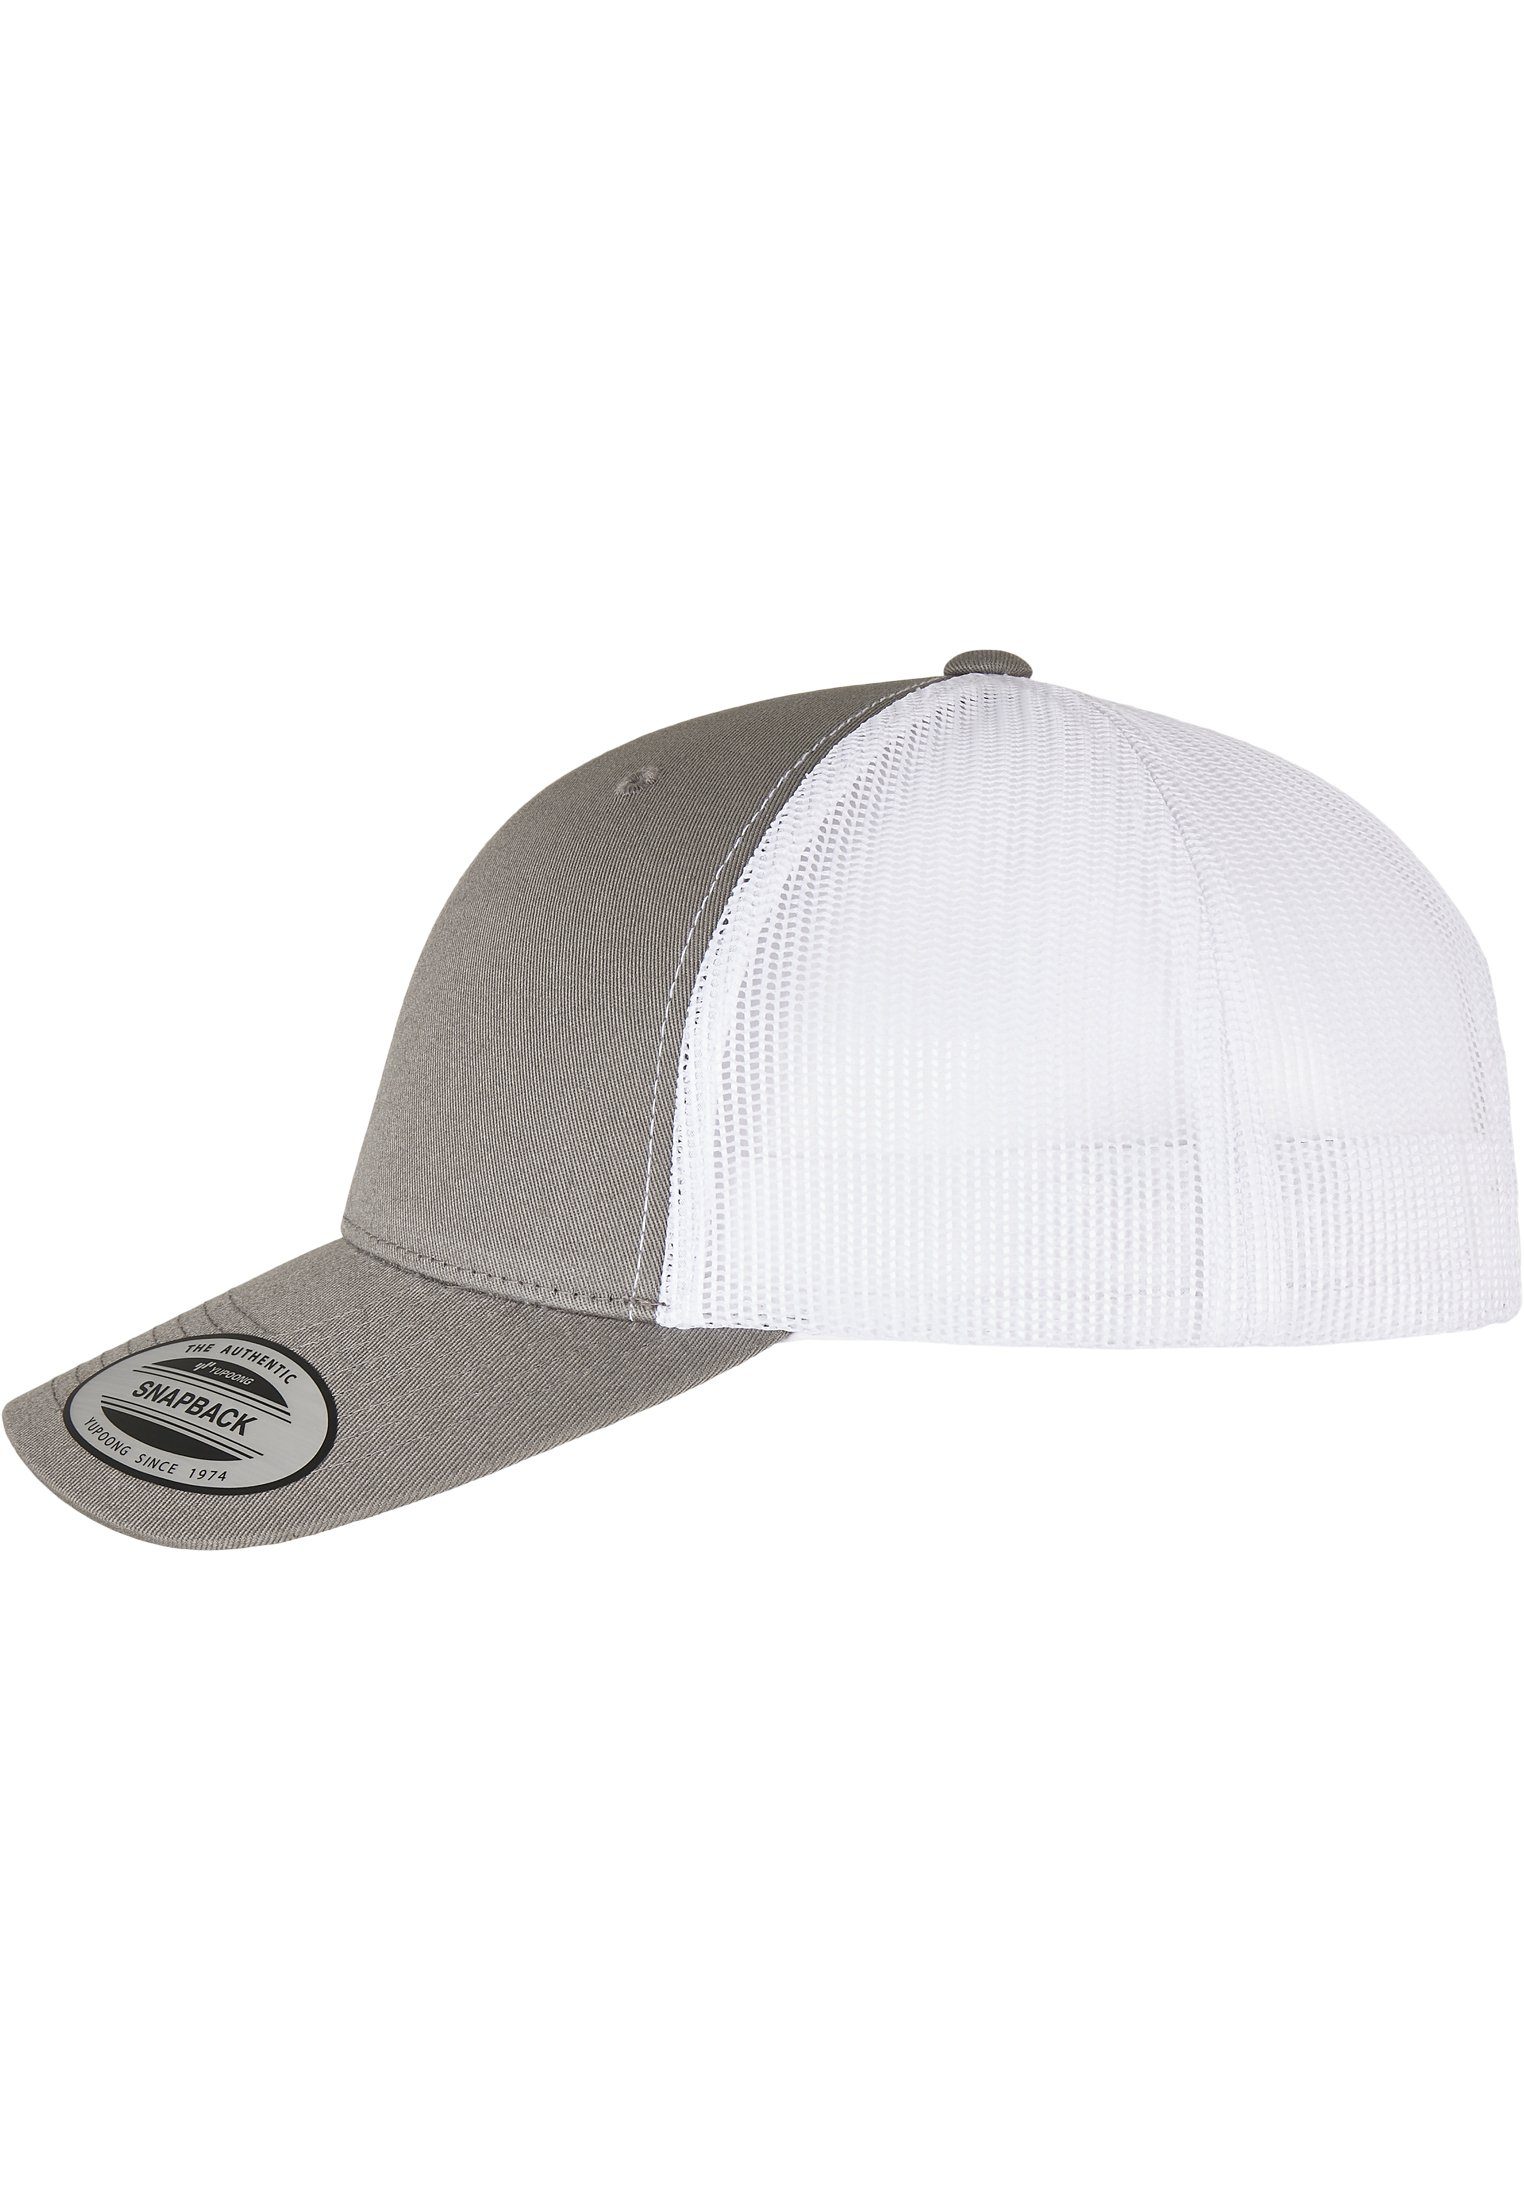 RETRO Flexfit CLASSICS TRUCKER Caps CAP RECYCLED 2-TONE Flex YP Cap grey/white